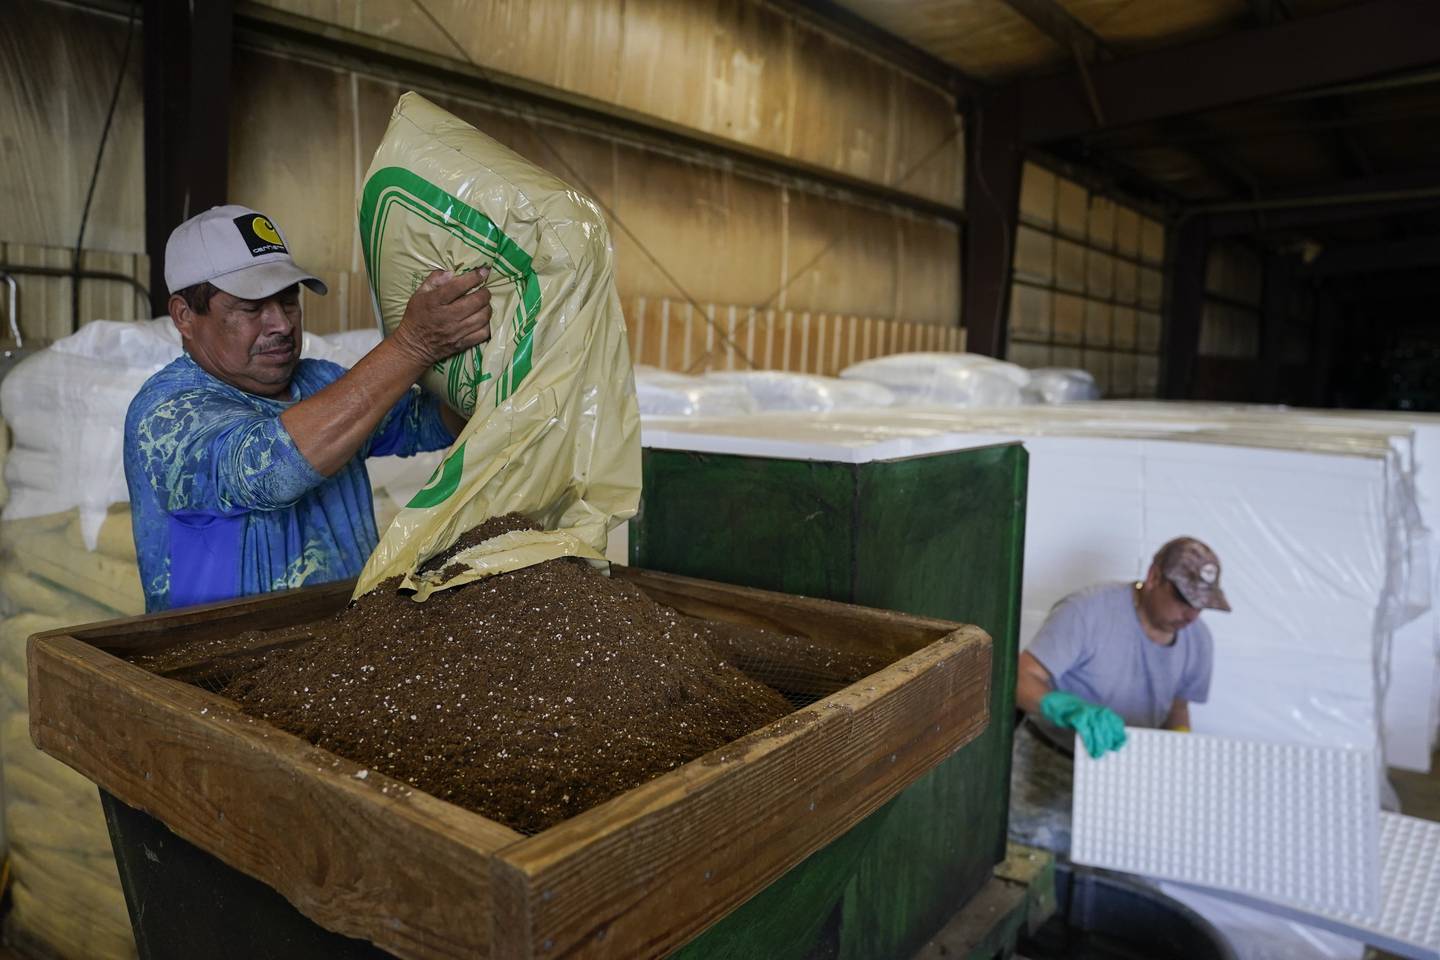 Fernando Osorio Loya (left), a contract worker from Veracruz, Mexico, dumps soil into a seeding machine as Miguel Angel (right), also a contract worker from Veracruz, Mexico, prepares trays for seeds at a farm in Crofton, Kentucky.